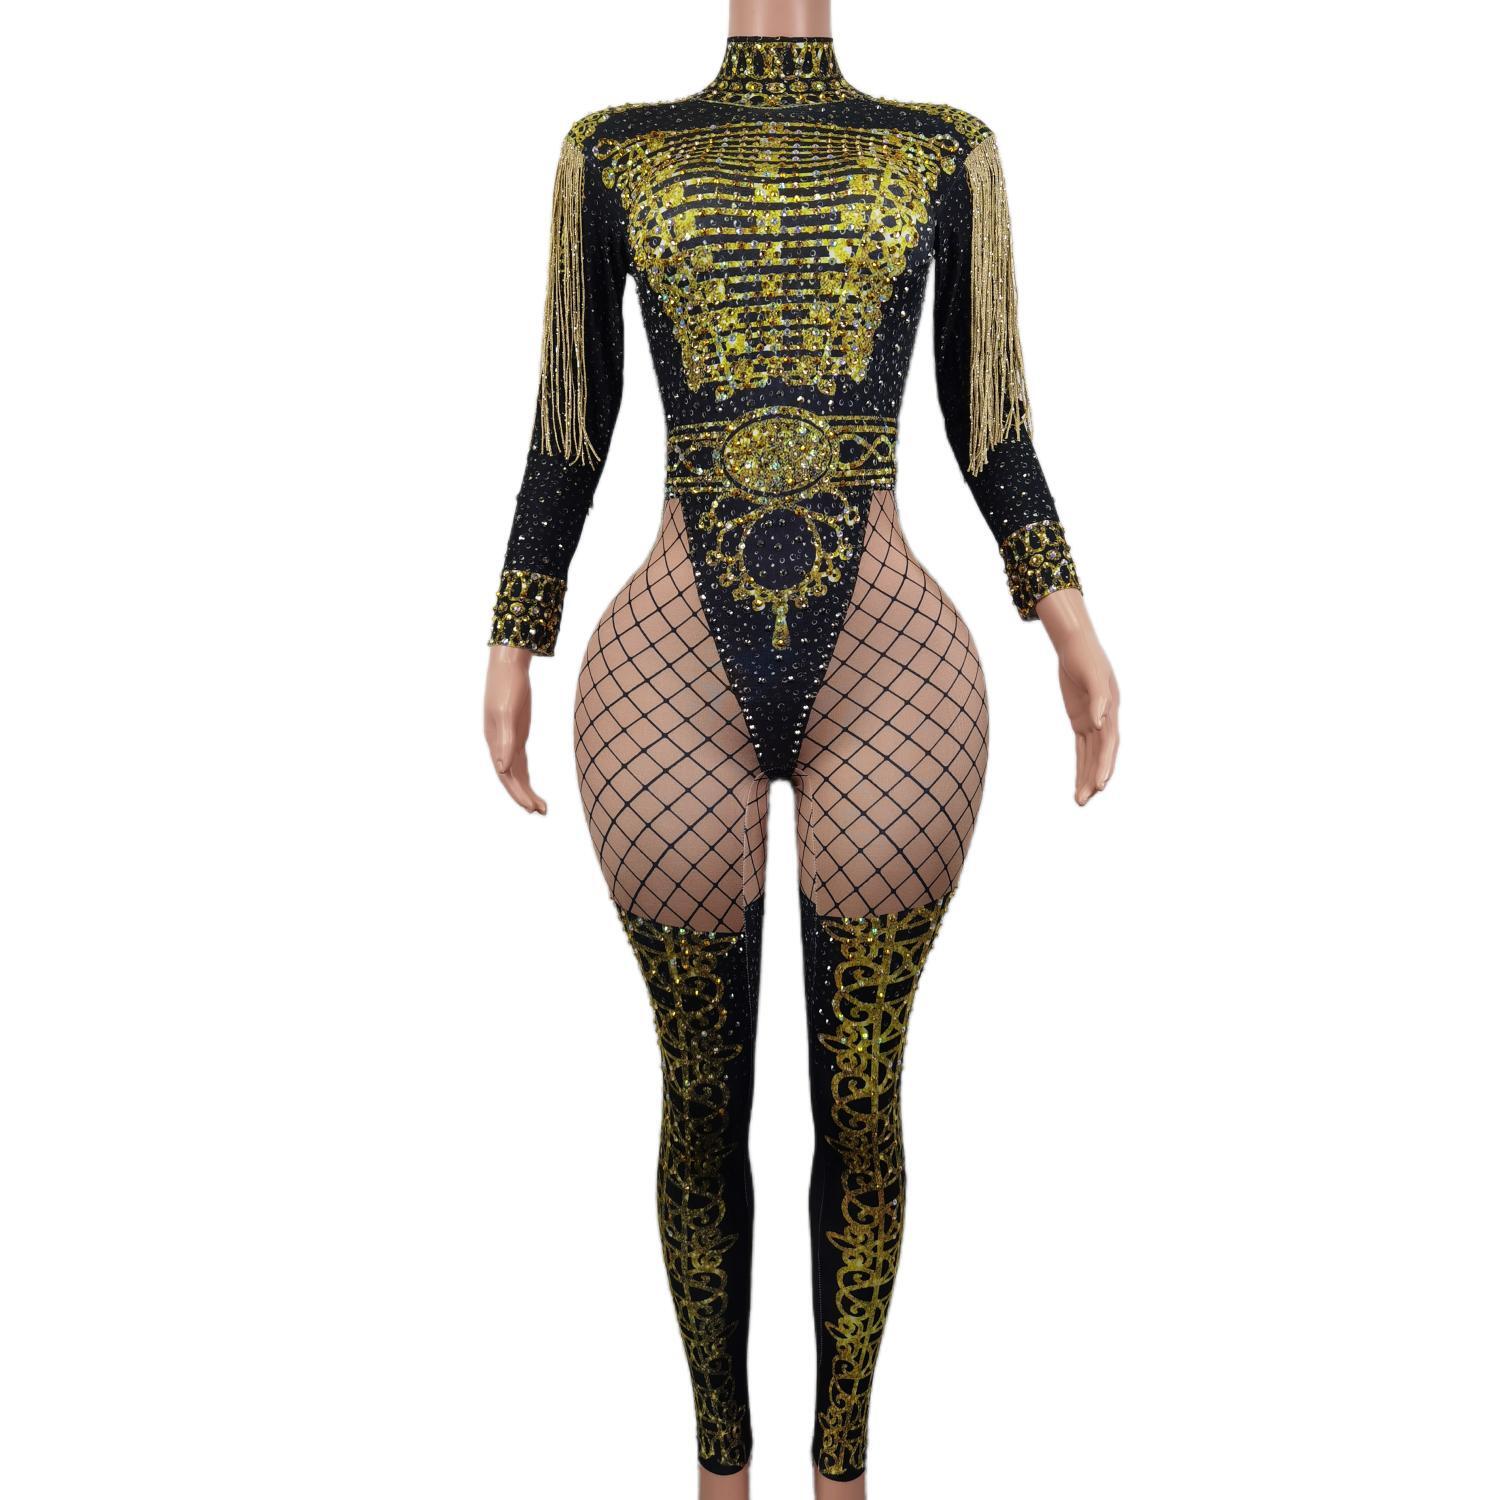 Luxury Outfit Dance Stage Show Nightclub Costume Singer Jumpsuits Wear Glisten Black Gold Crystals Bodysuit with Tassel